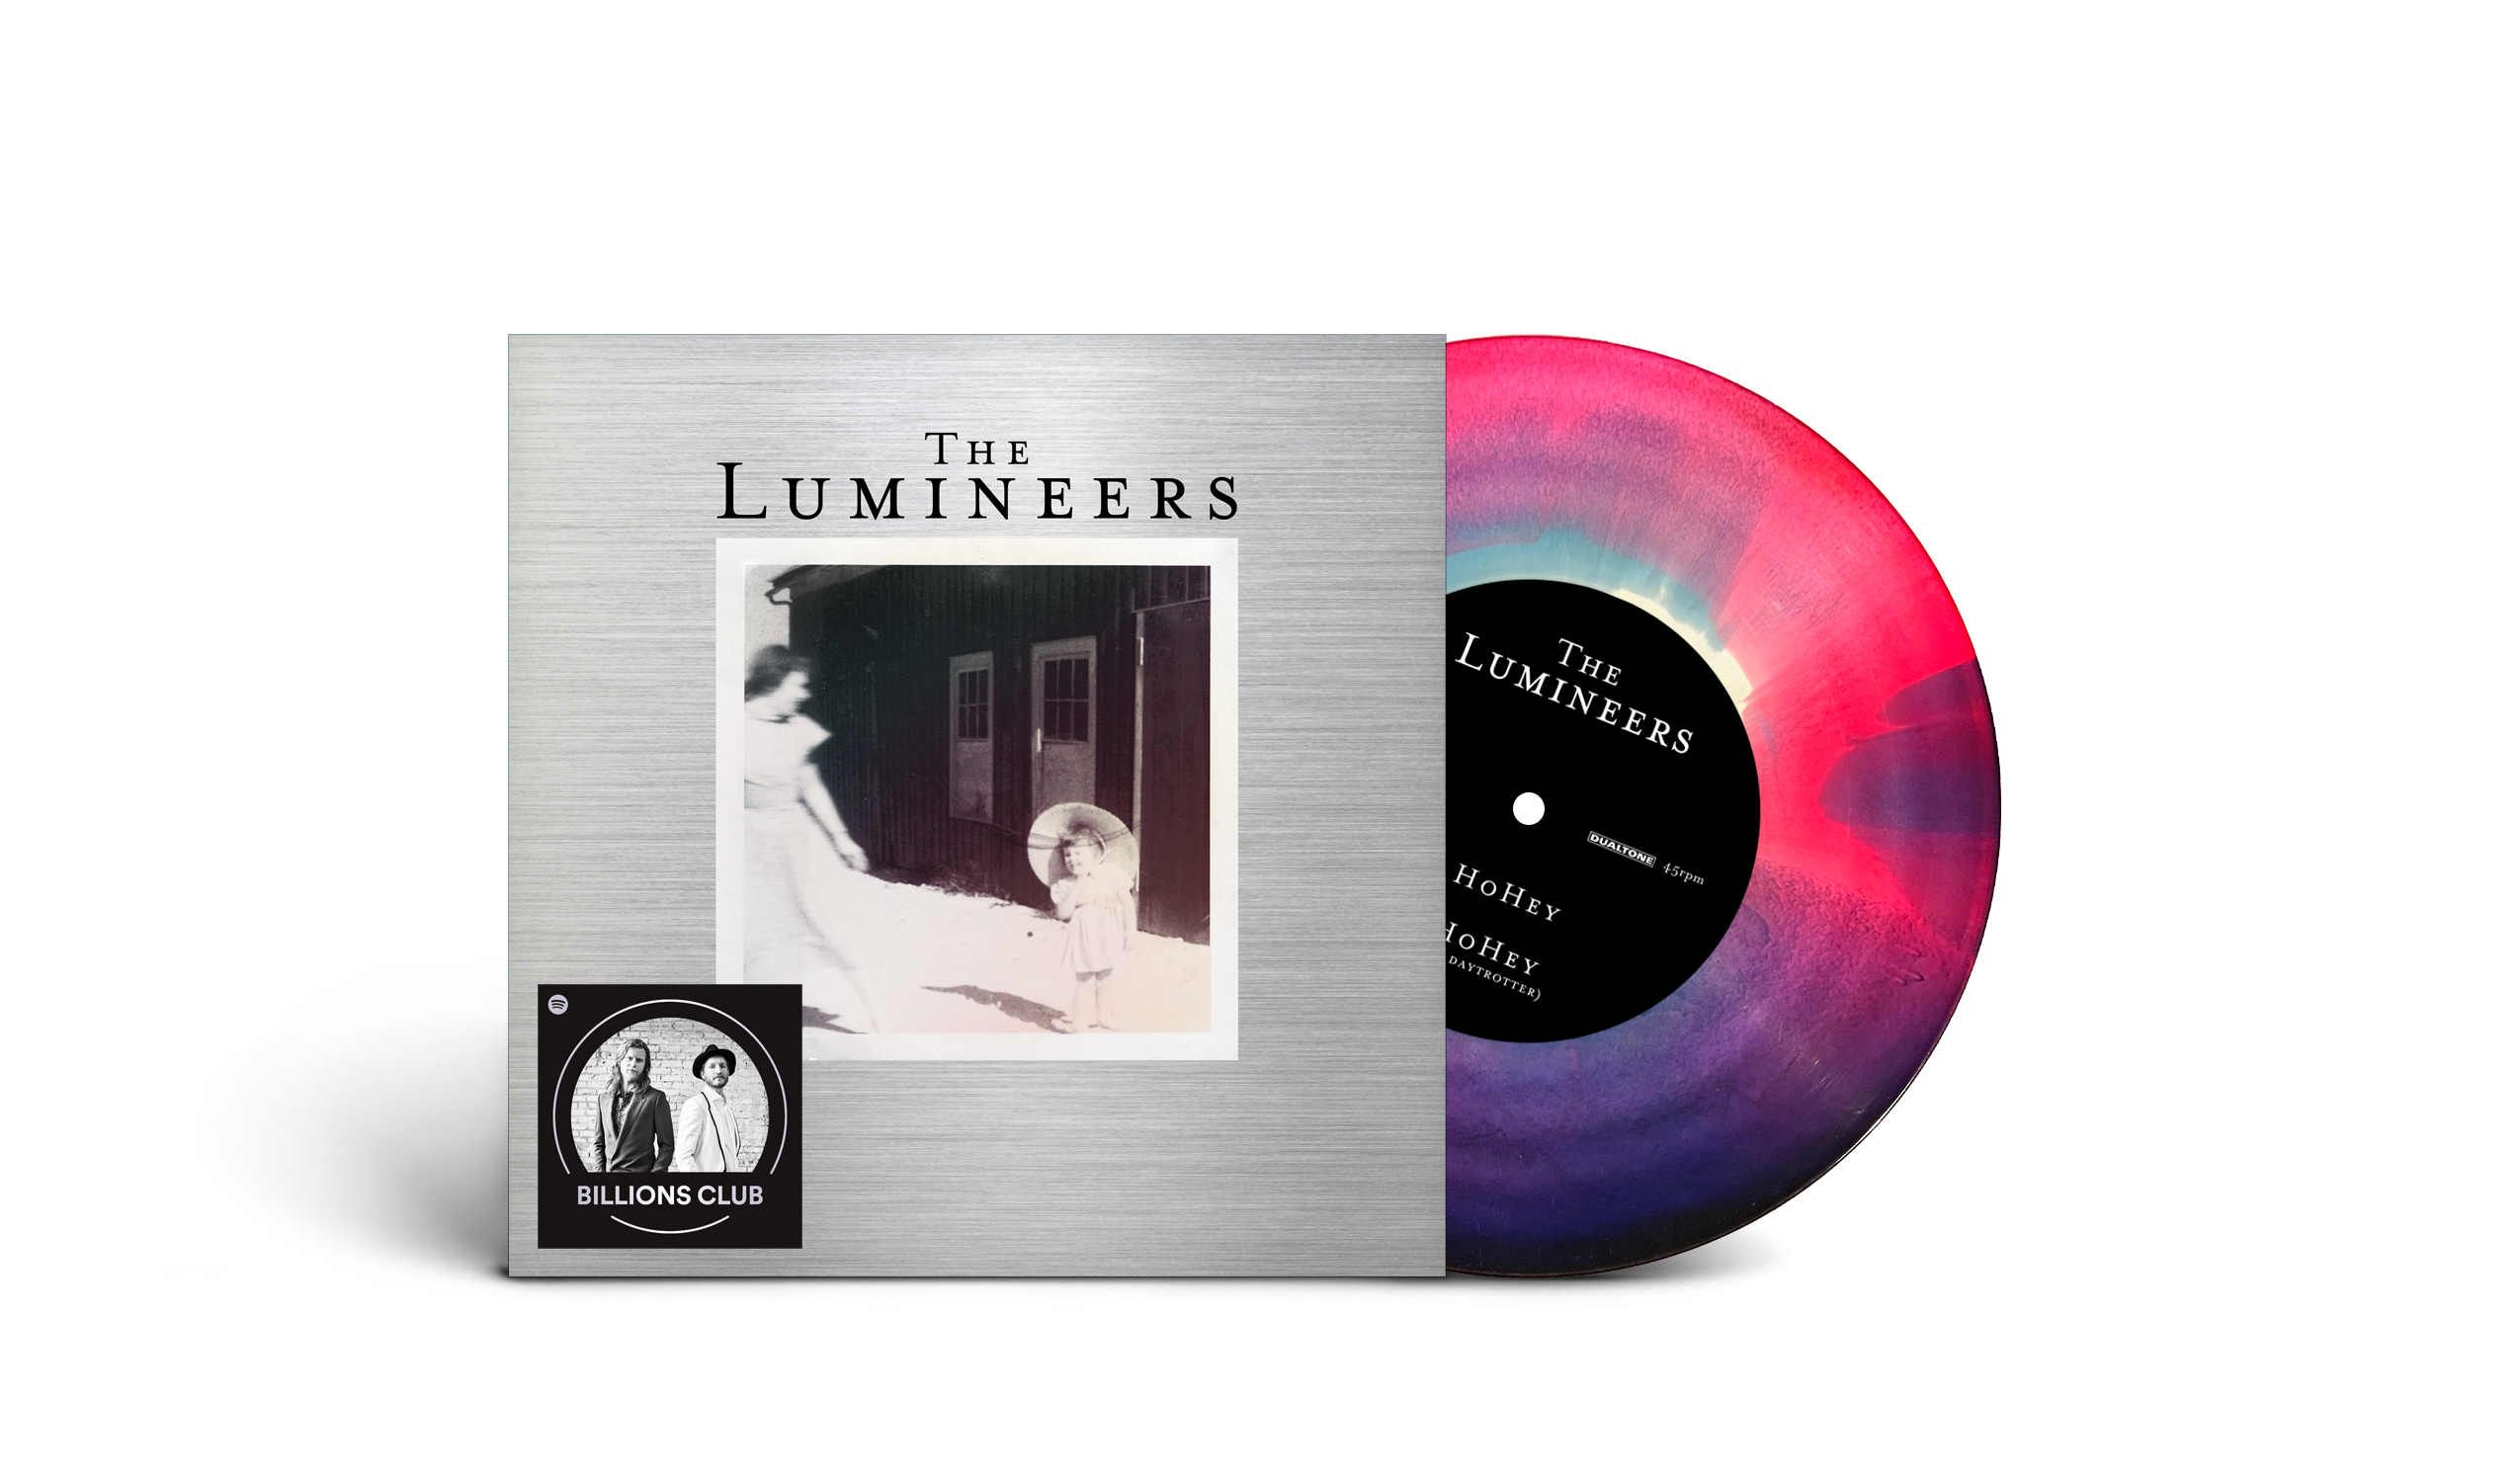 The Lumineers - Billions Club: Pink/Blue Vinyl 7" Single